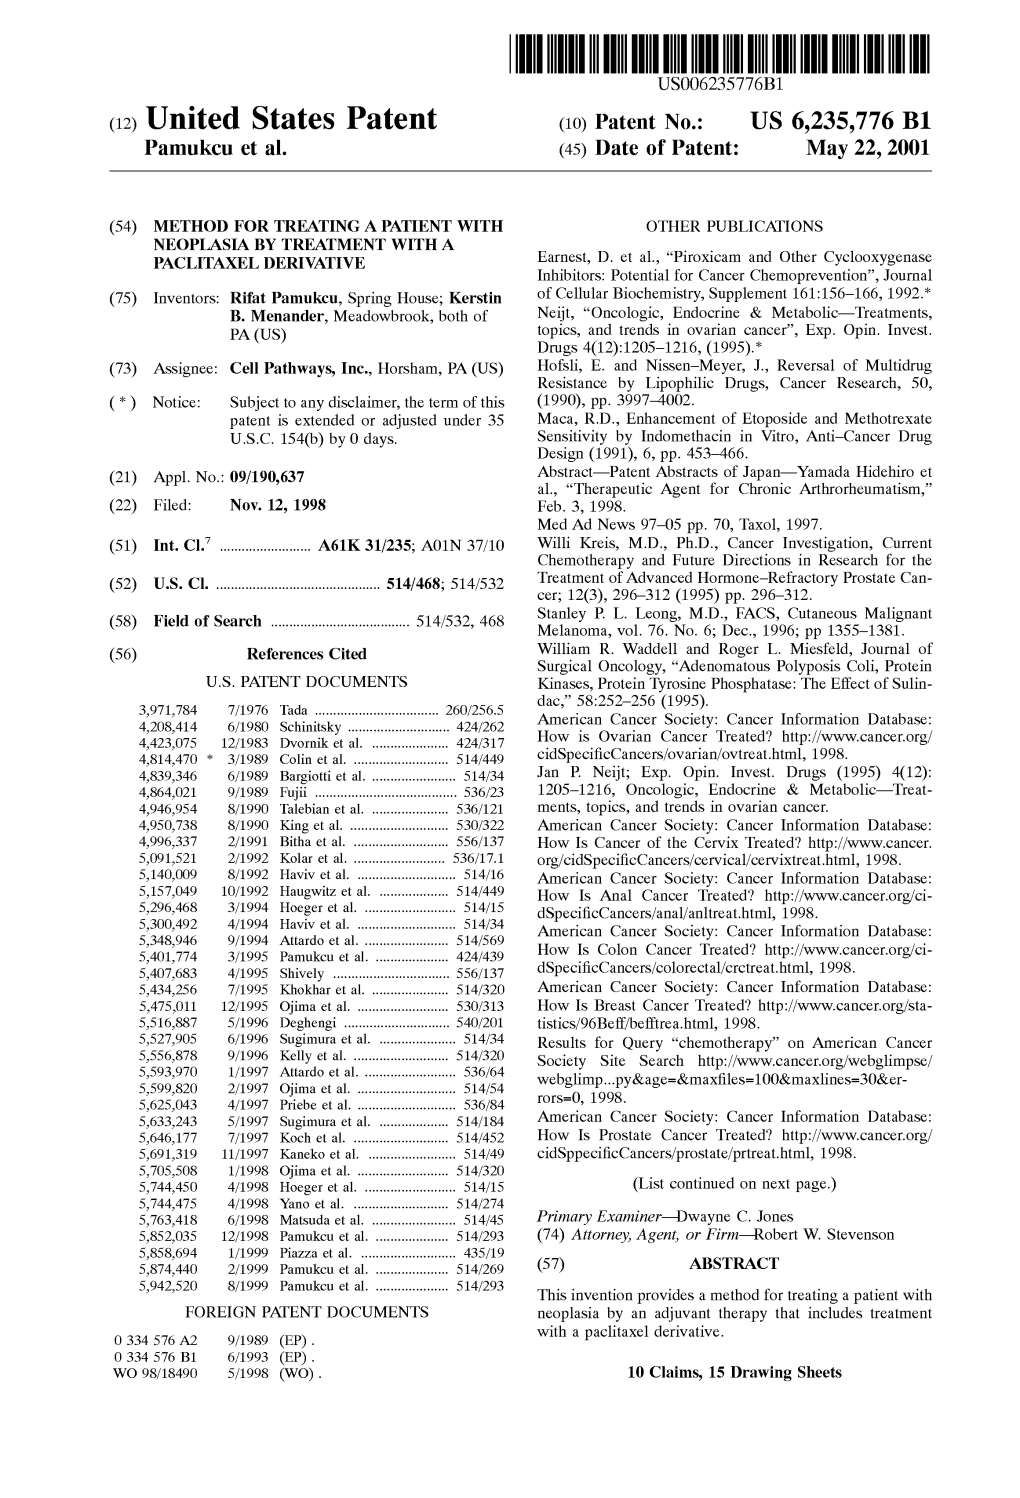 (12) United States Patent (10) Patent No.: US 6,235,776 B1 Pamukcu Et Al